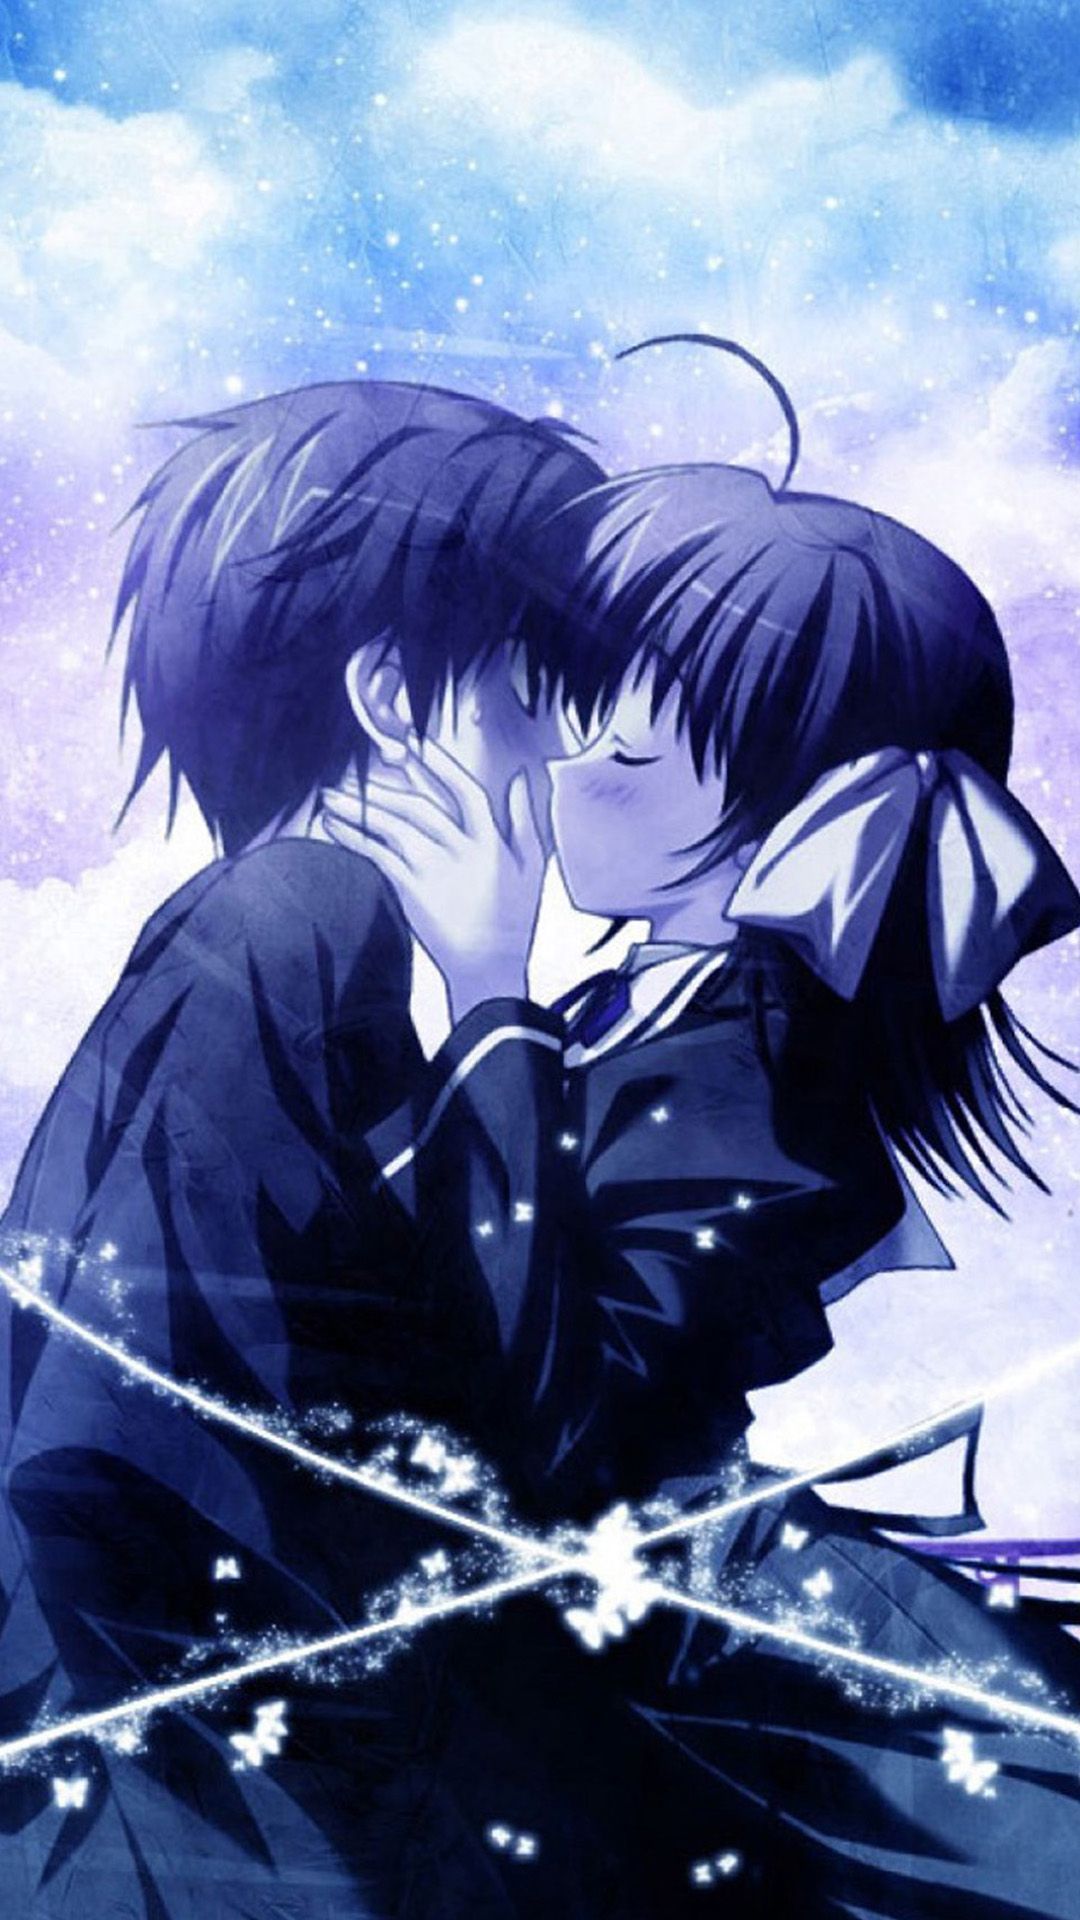 Anime Couple Kissing HD Anime Couple Wallpapers | HD Wallpapers | ID #85543